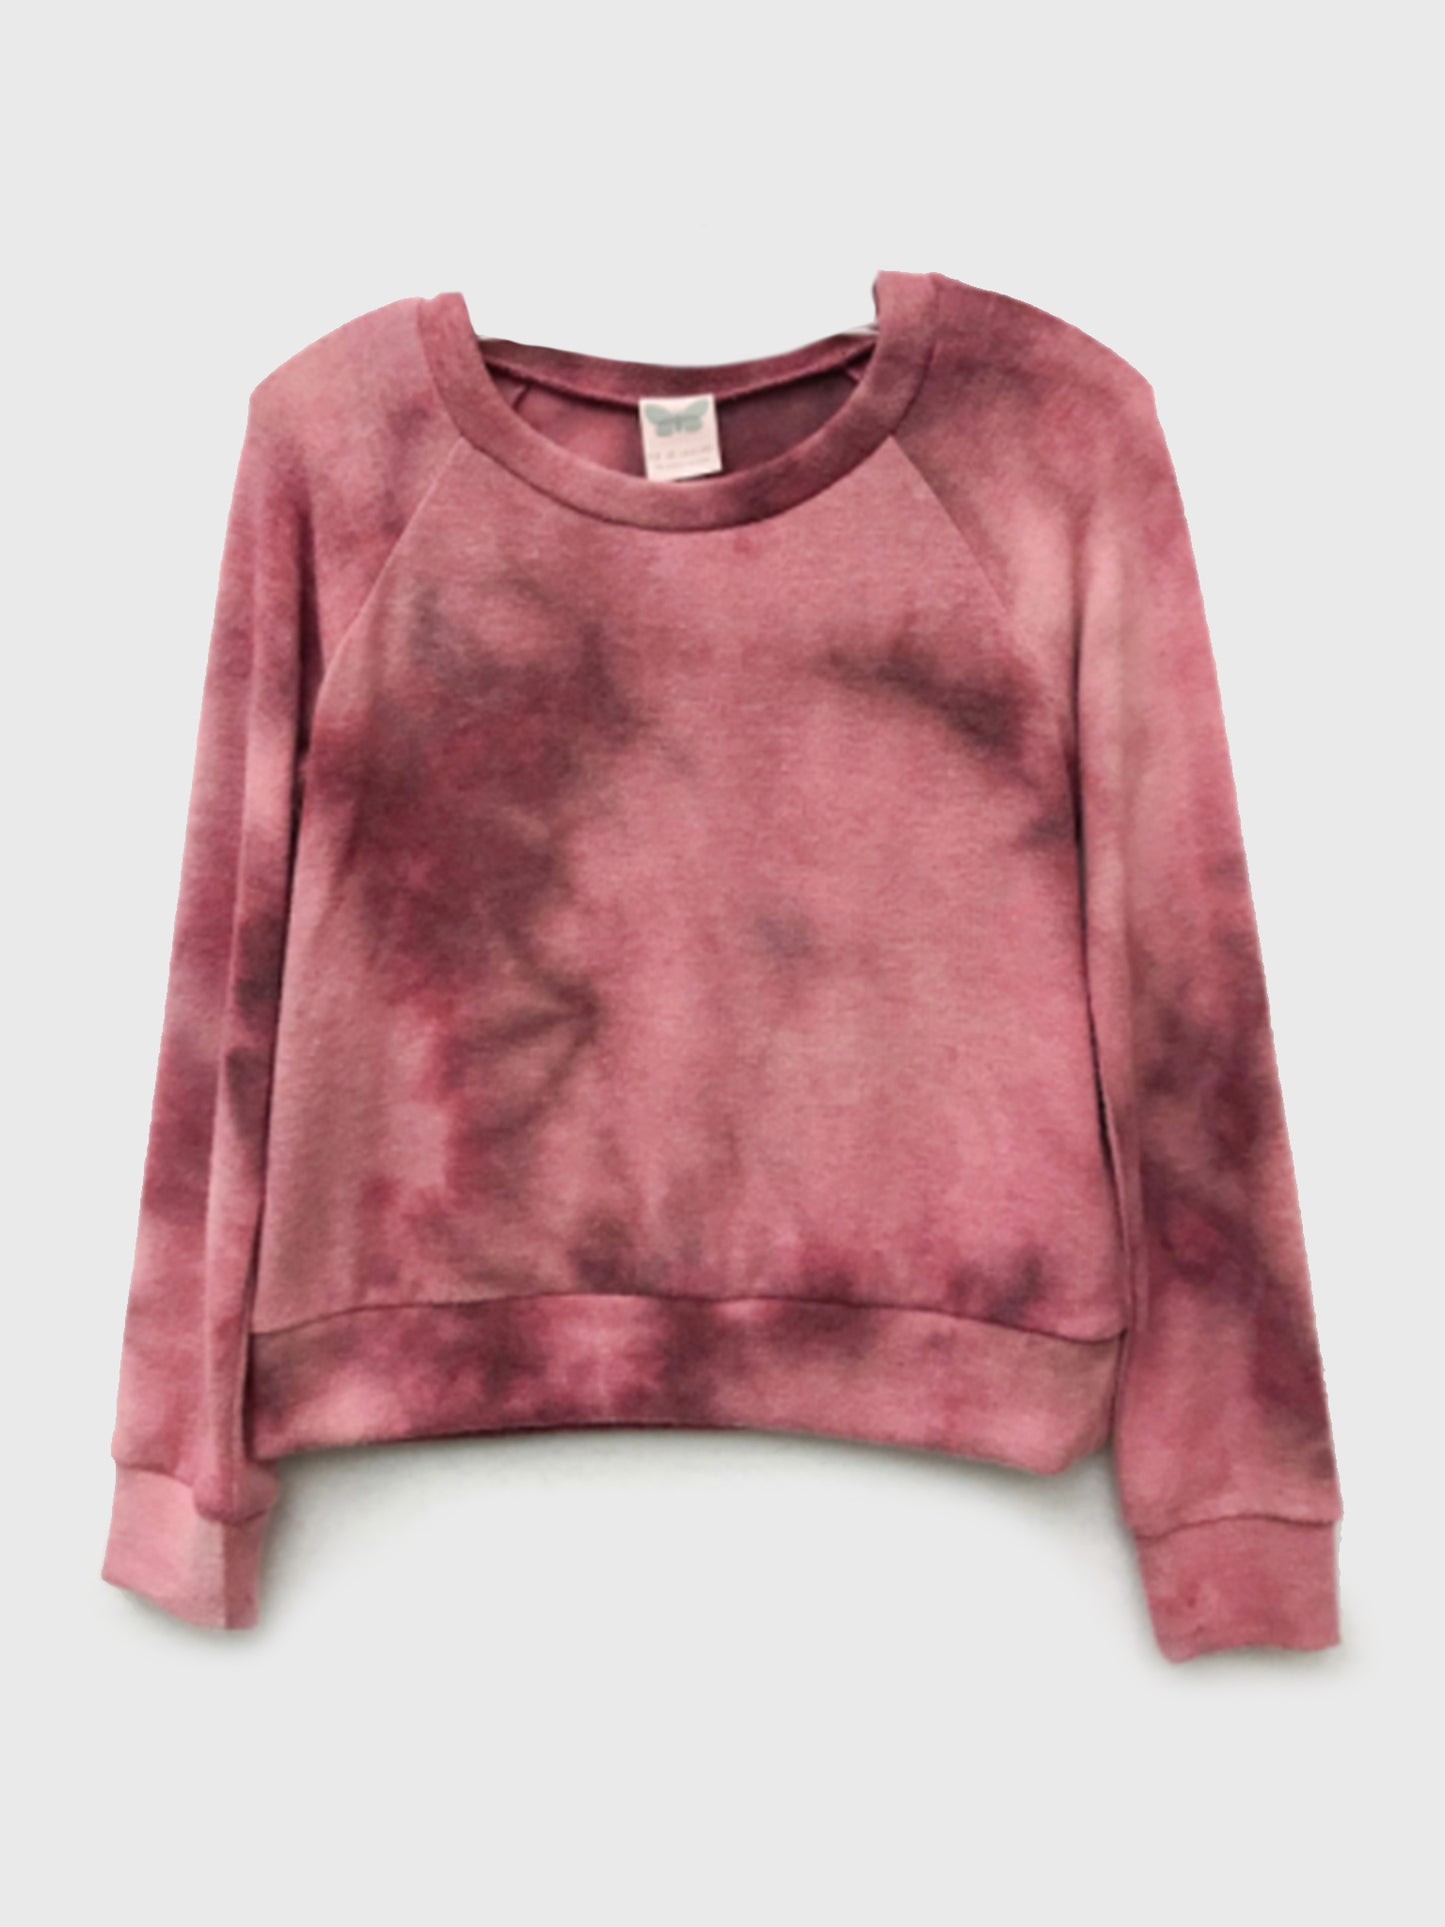 For All Seasons Girls' Tie Dye Pink Crewneck Sweater